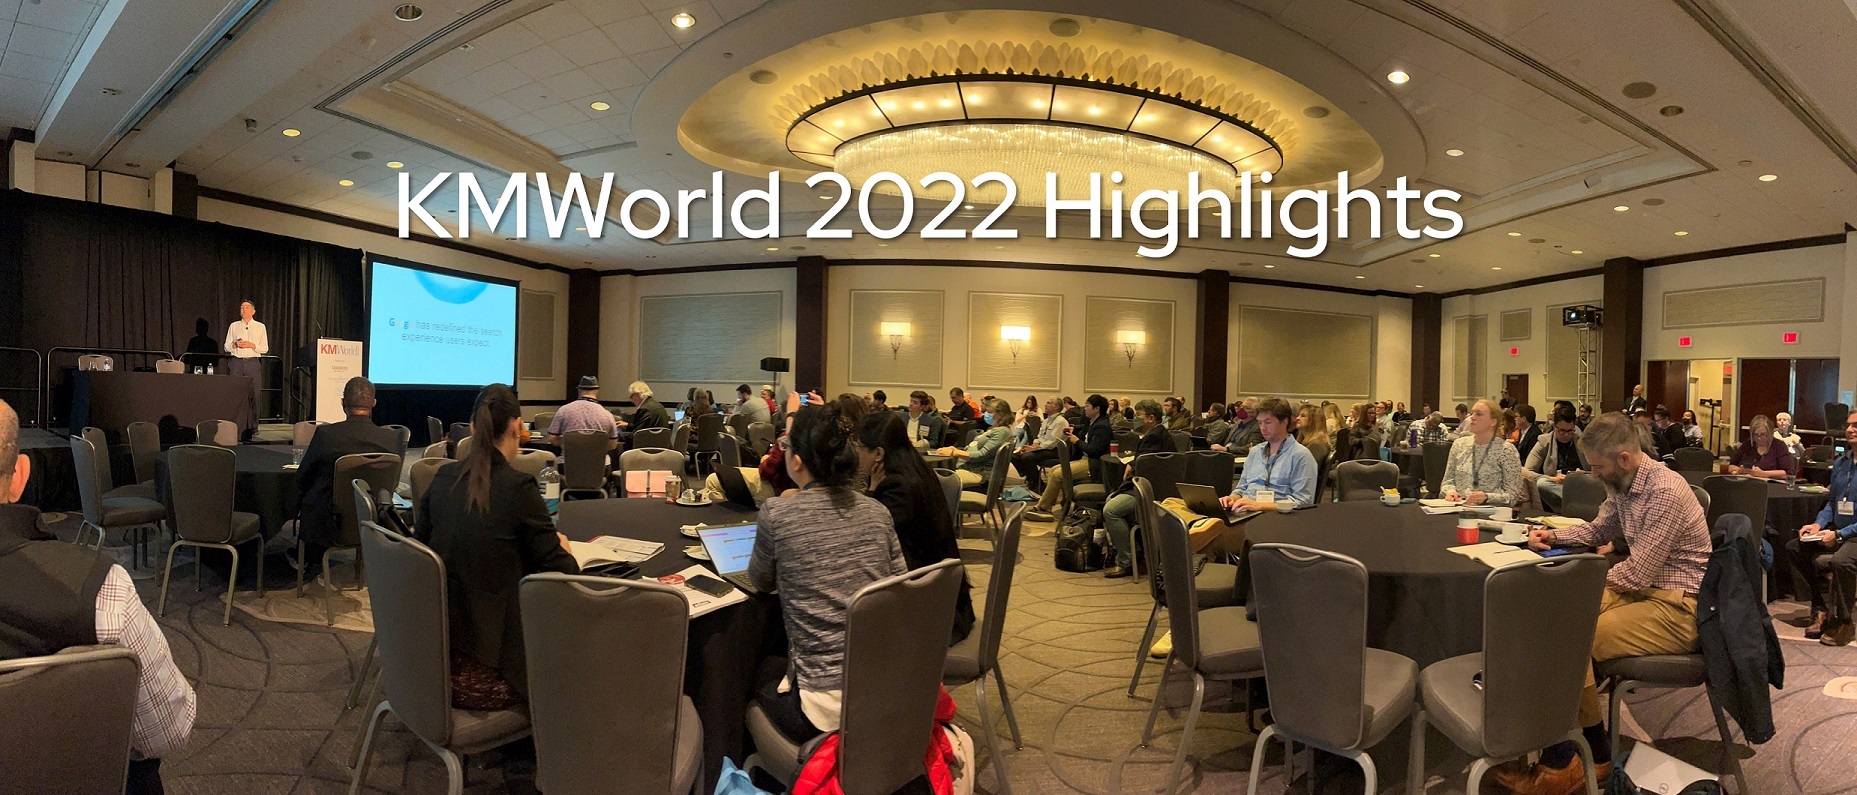 KMWorld 2022 keynote highlights